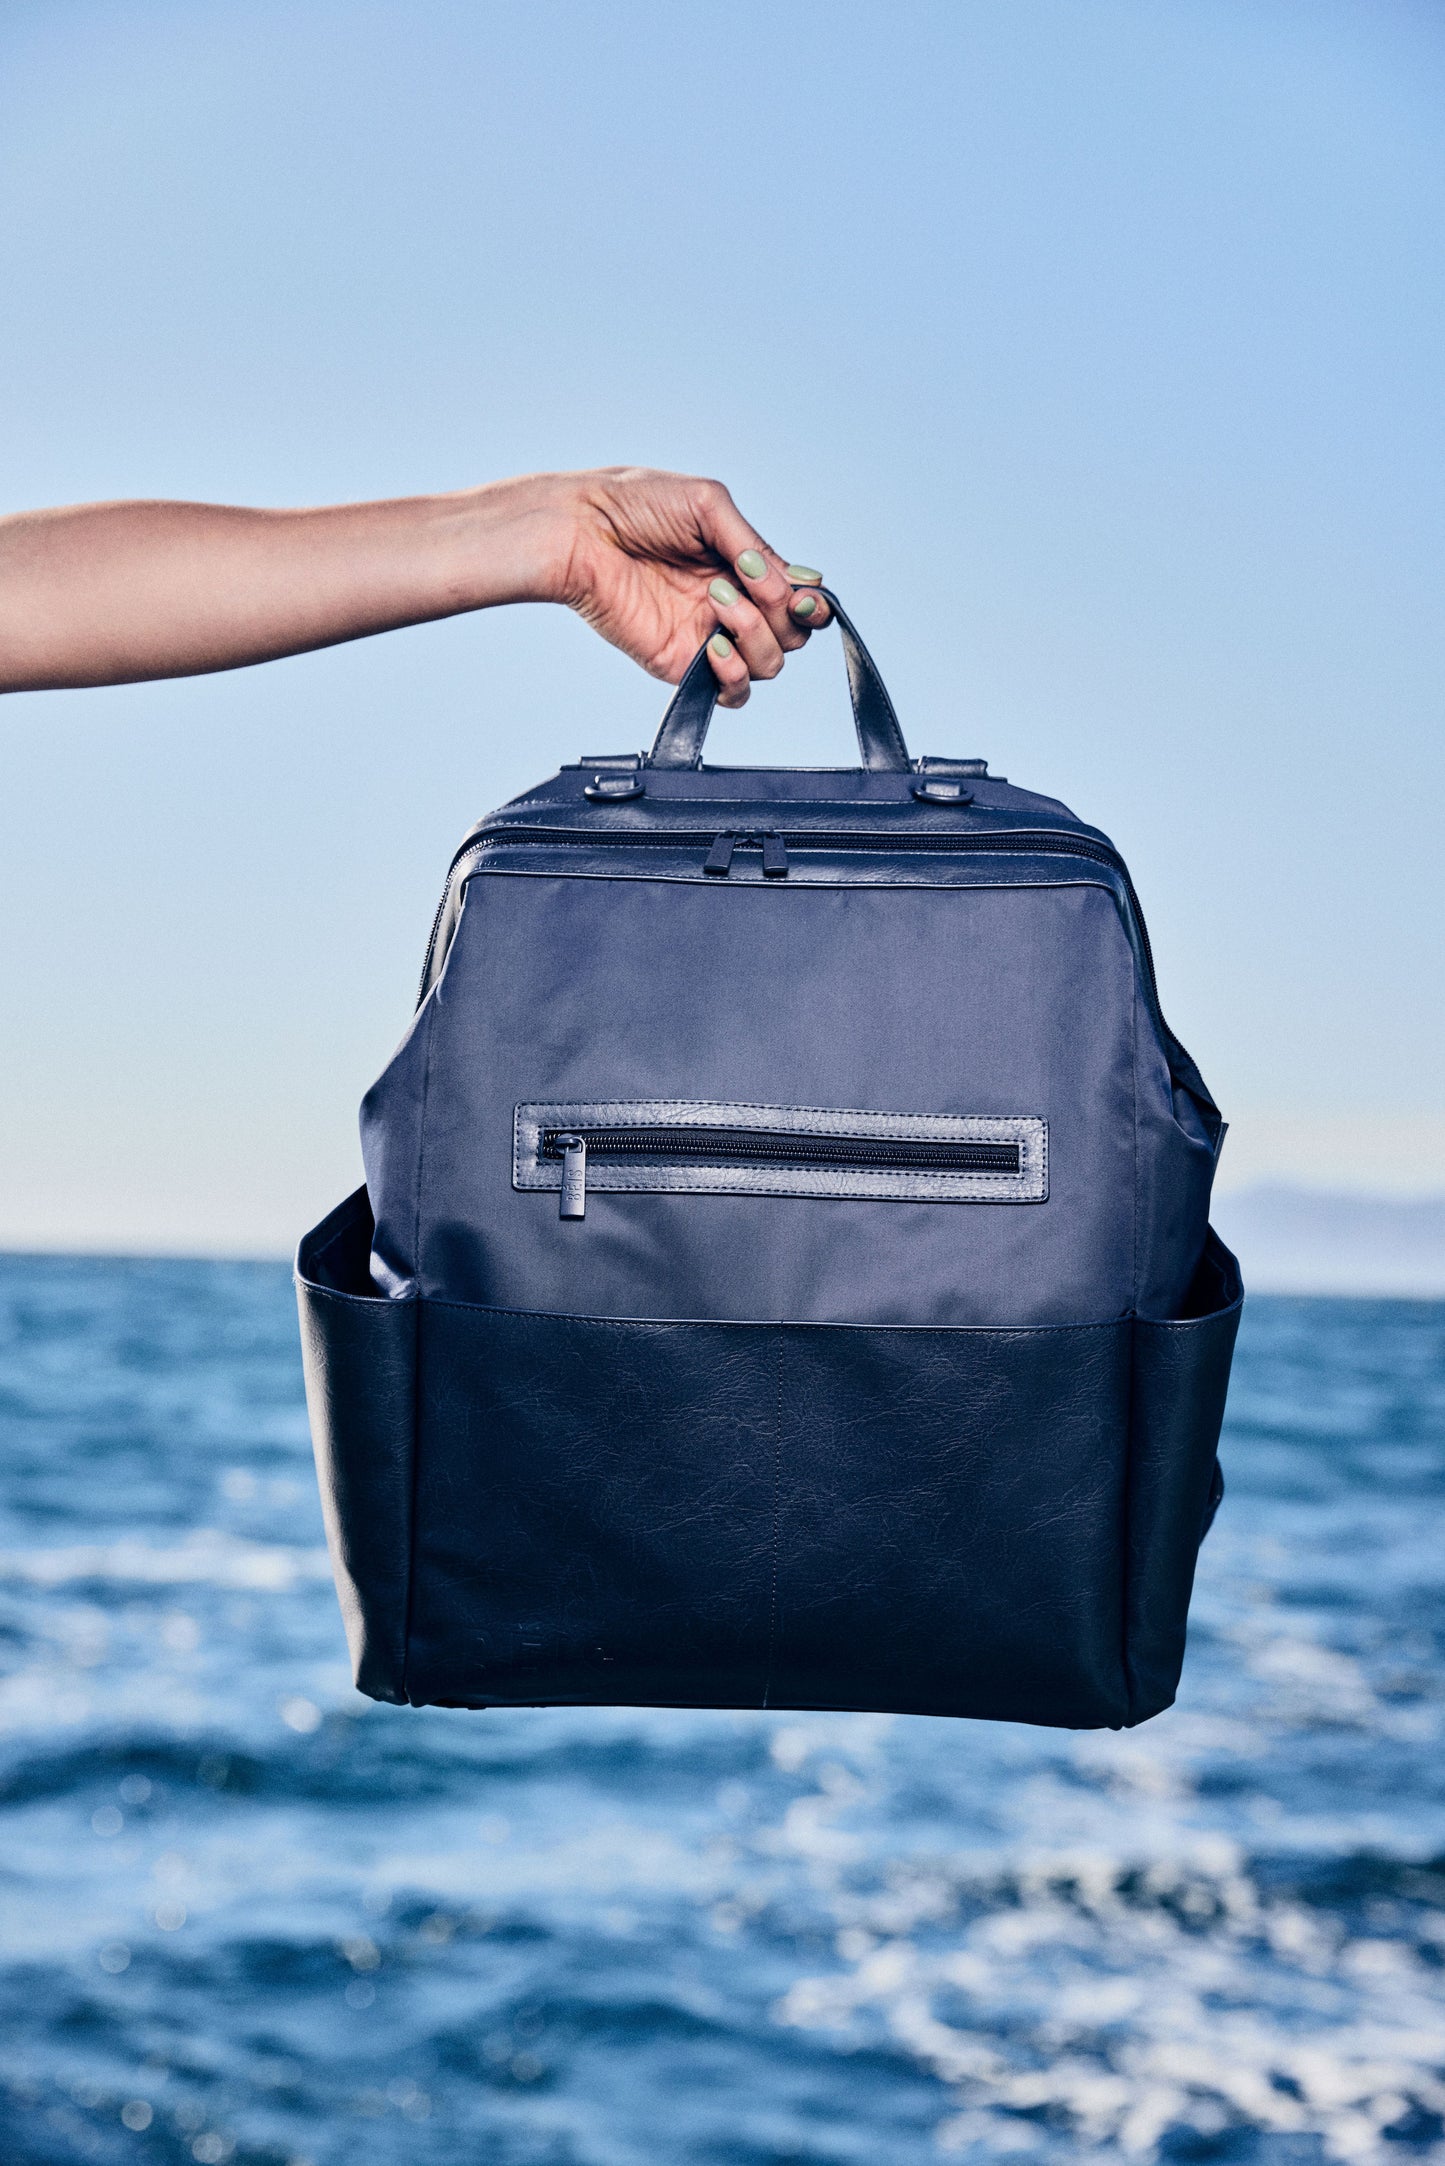 The Backpack Diaper Bag in Navy